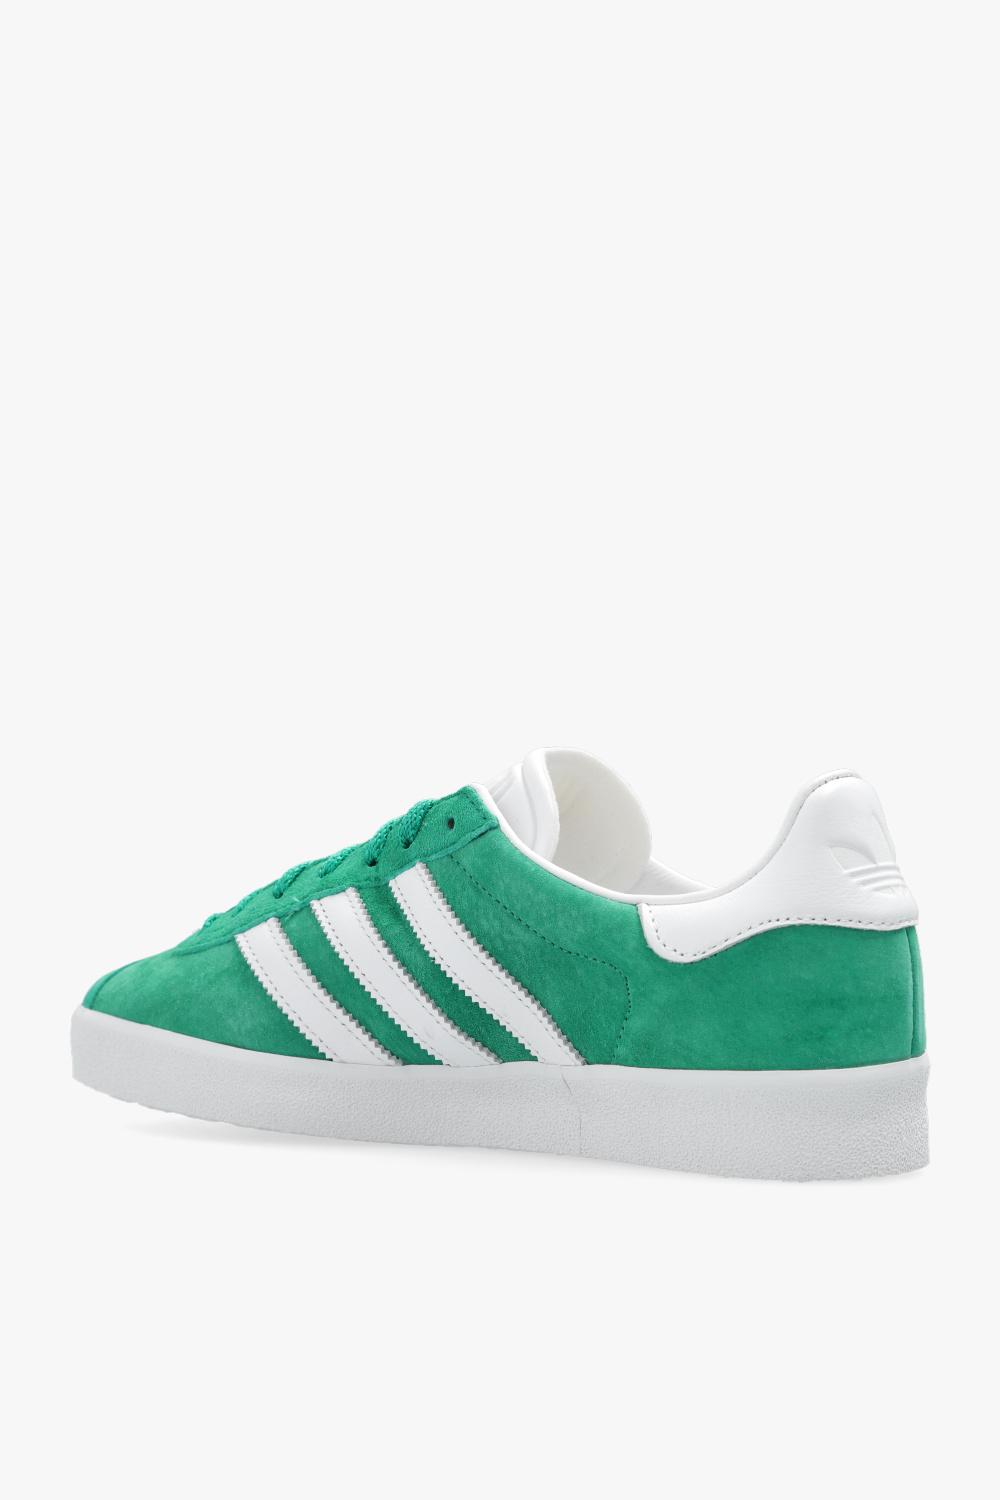 adidas Originals 'gazelle 85' Sneakers in Green | Lyst UK